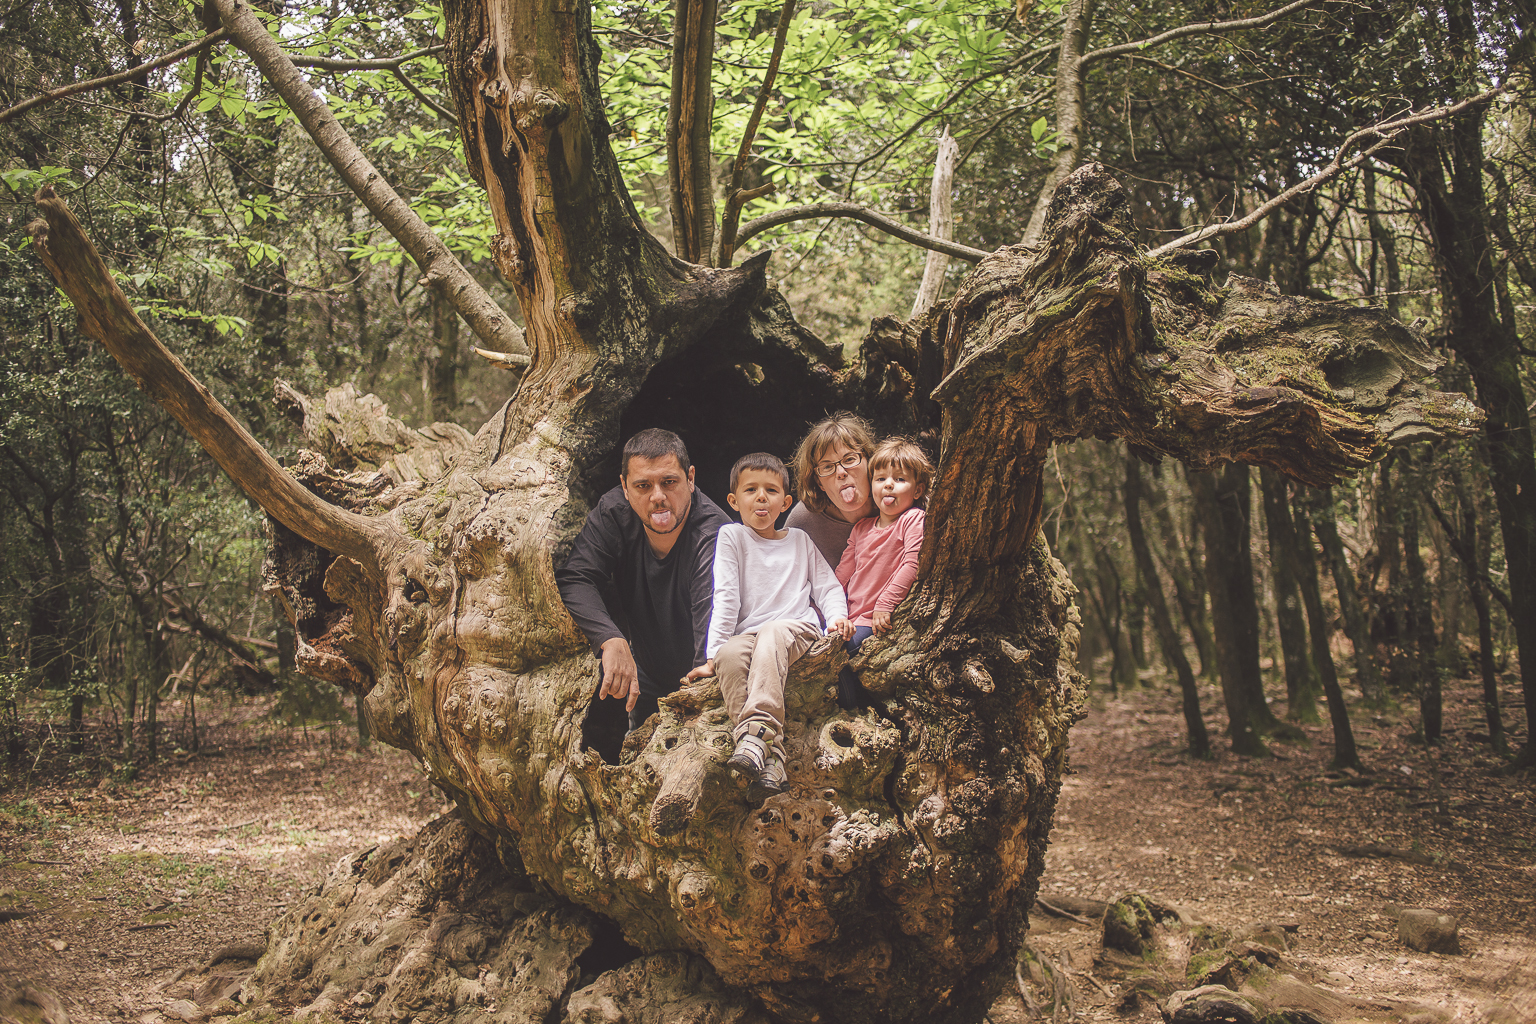 Fotógrafo de familia :: Hotel Sant Bernat - Montseny :: Fotografía familiar :: Bosque :: Montaña del Montseny :: Reportaje de familia en el bosque :: Familia en el bosque :: Familia en la montaña :: Fotografía natural de familia